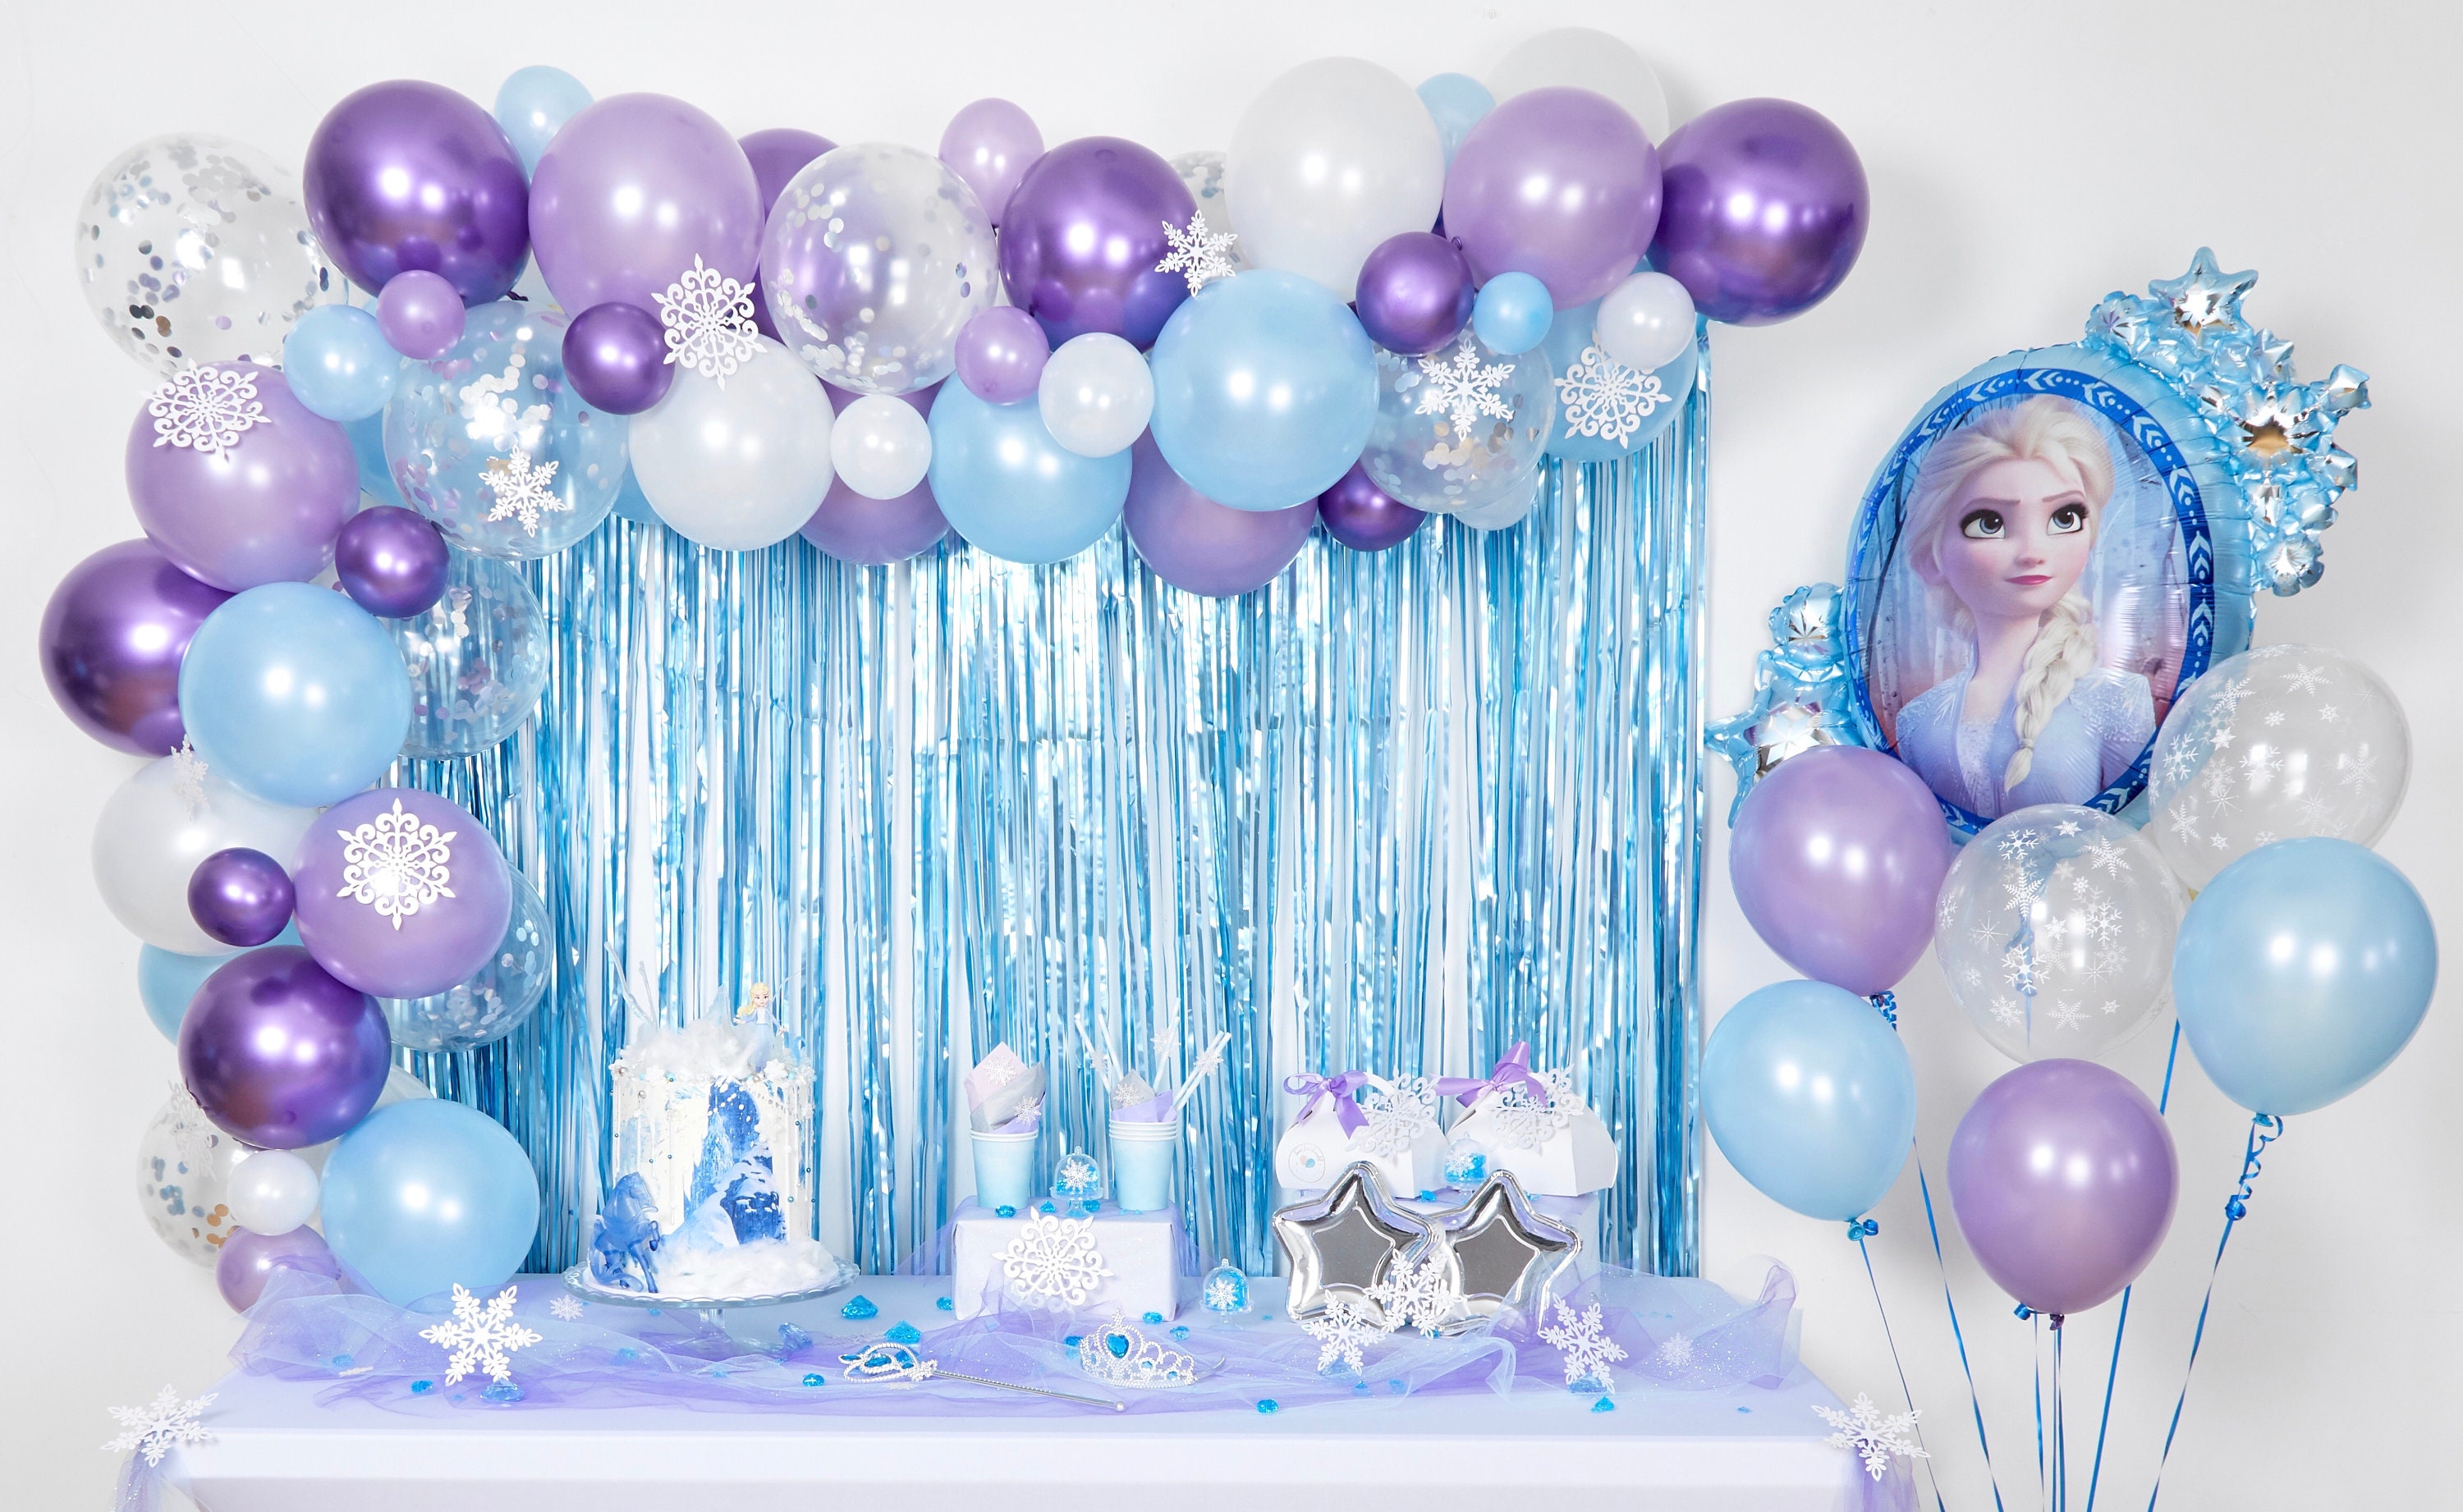 Frozen Balloon Decoration - Jocelyn Balloons